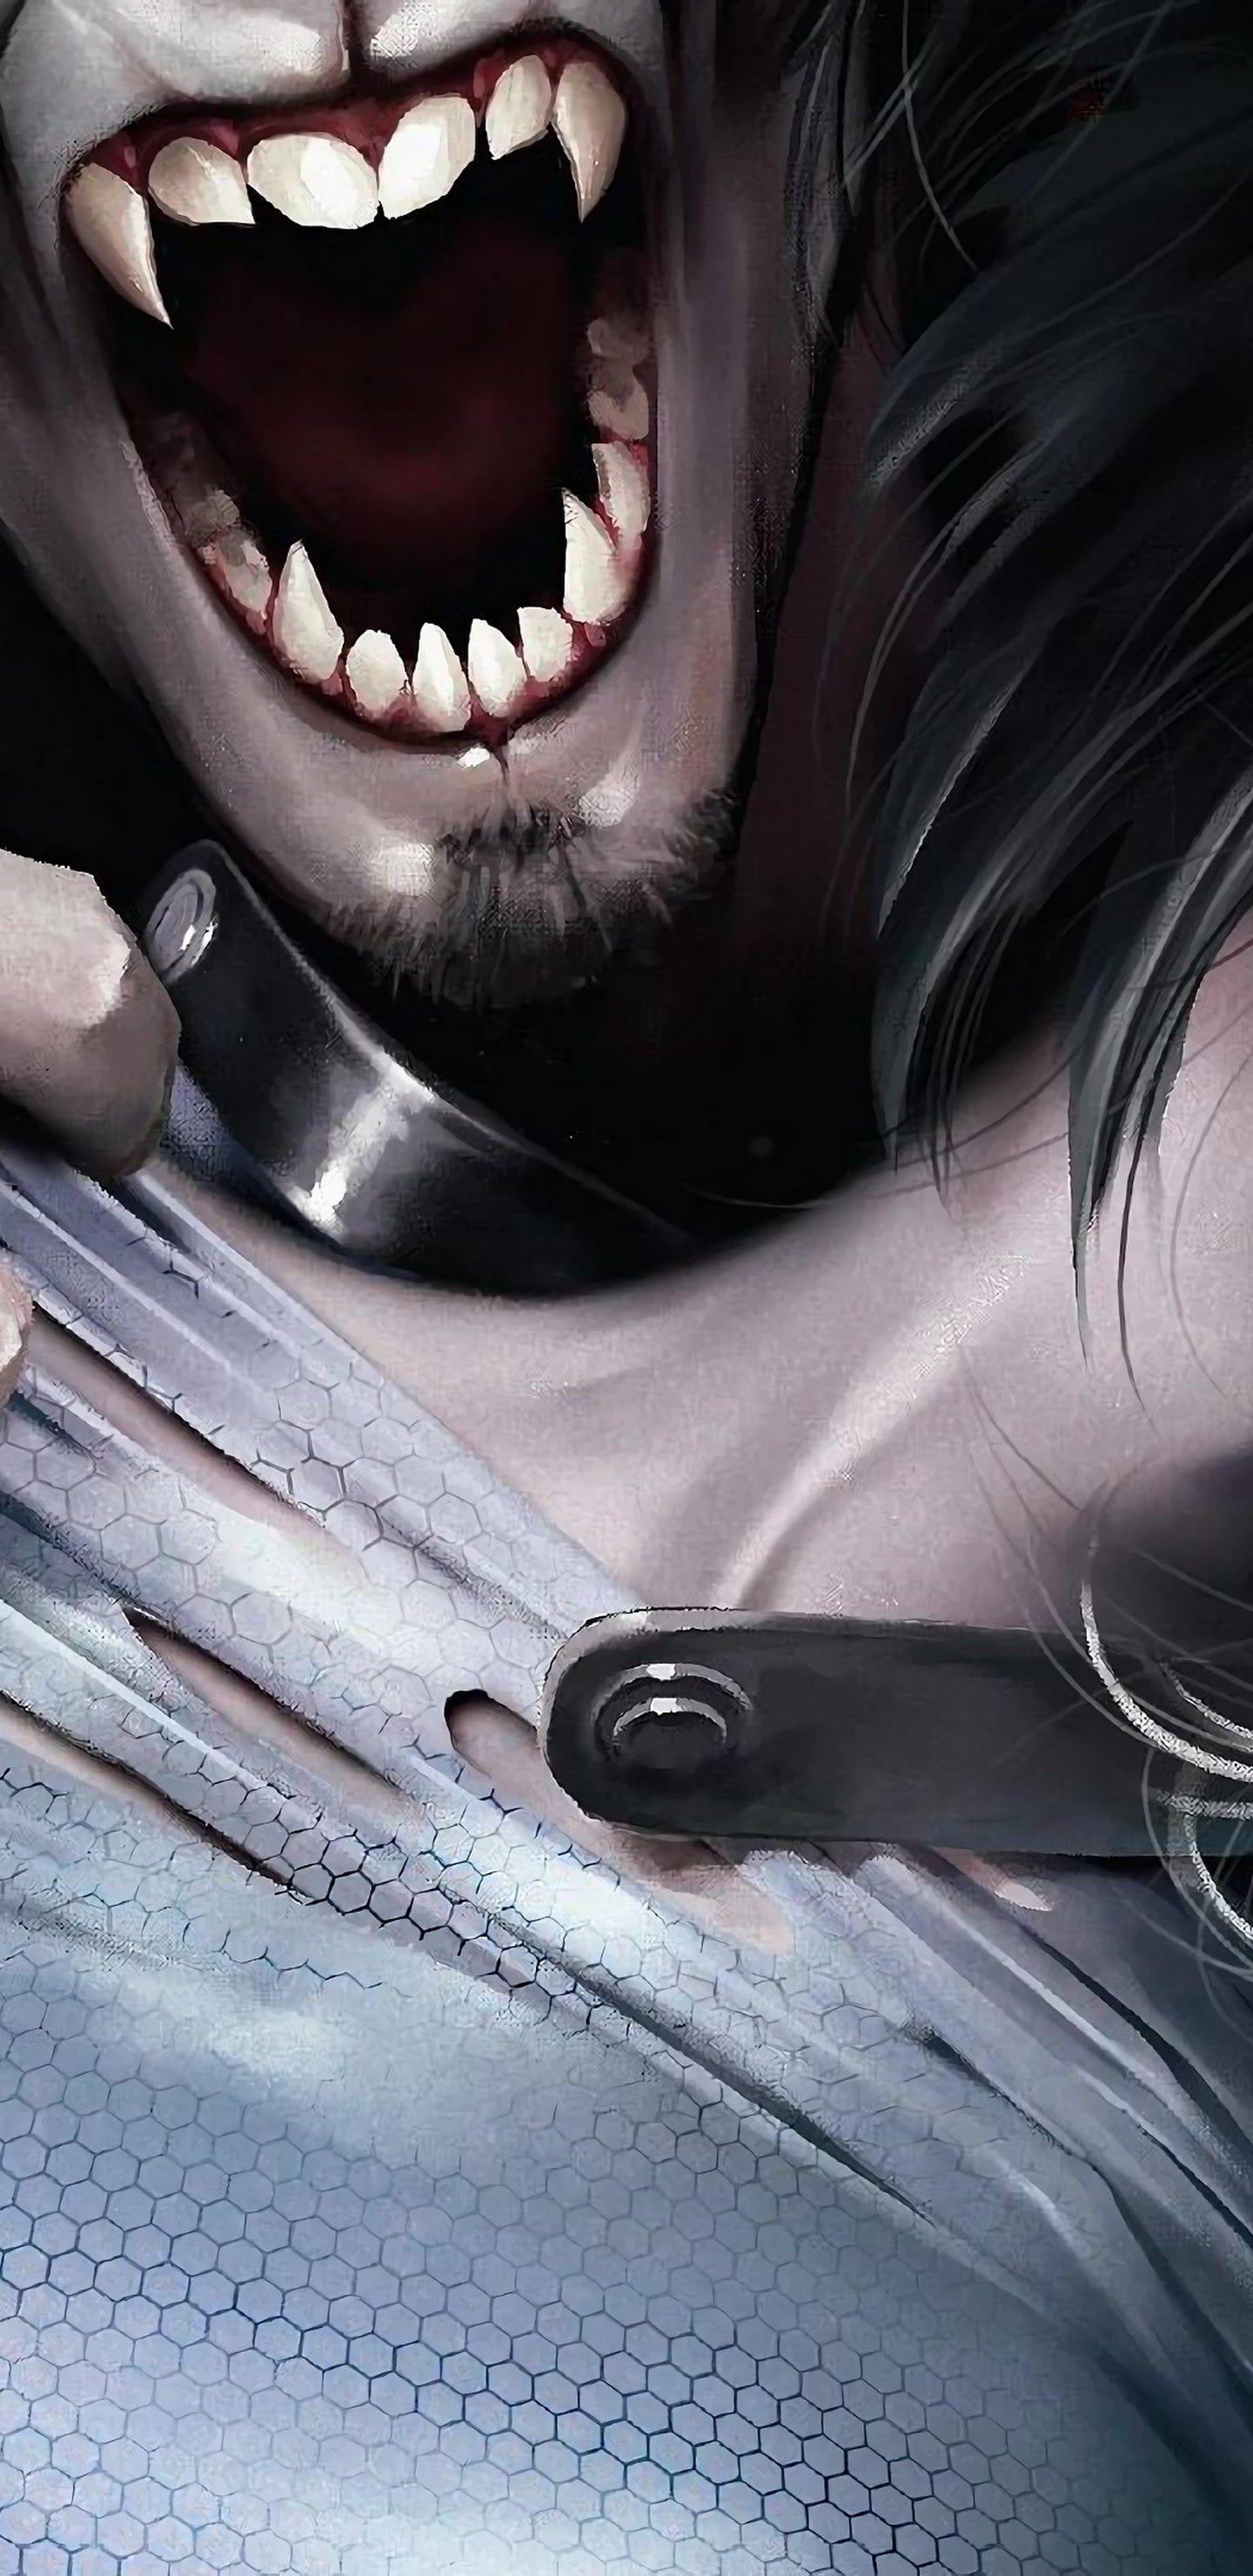 Morbius Movie Vampire HD 4K Wallpaper 82356